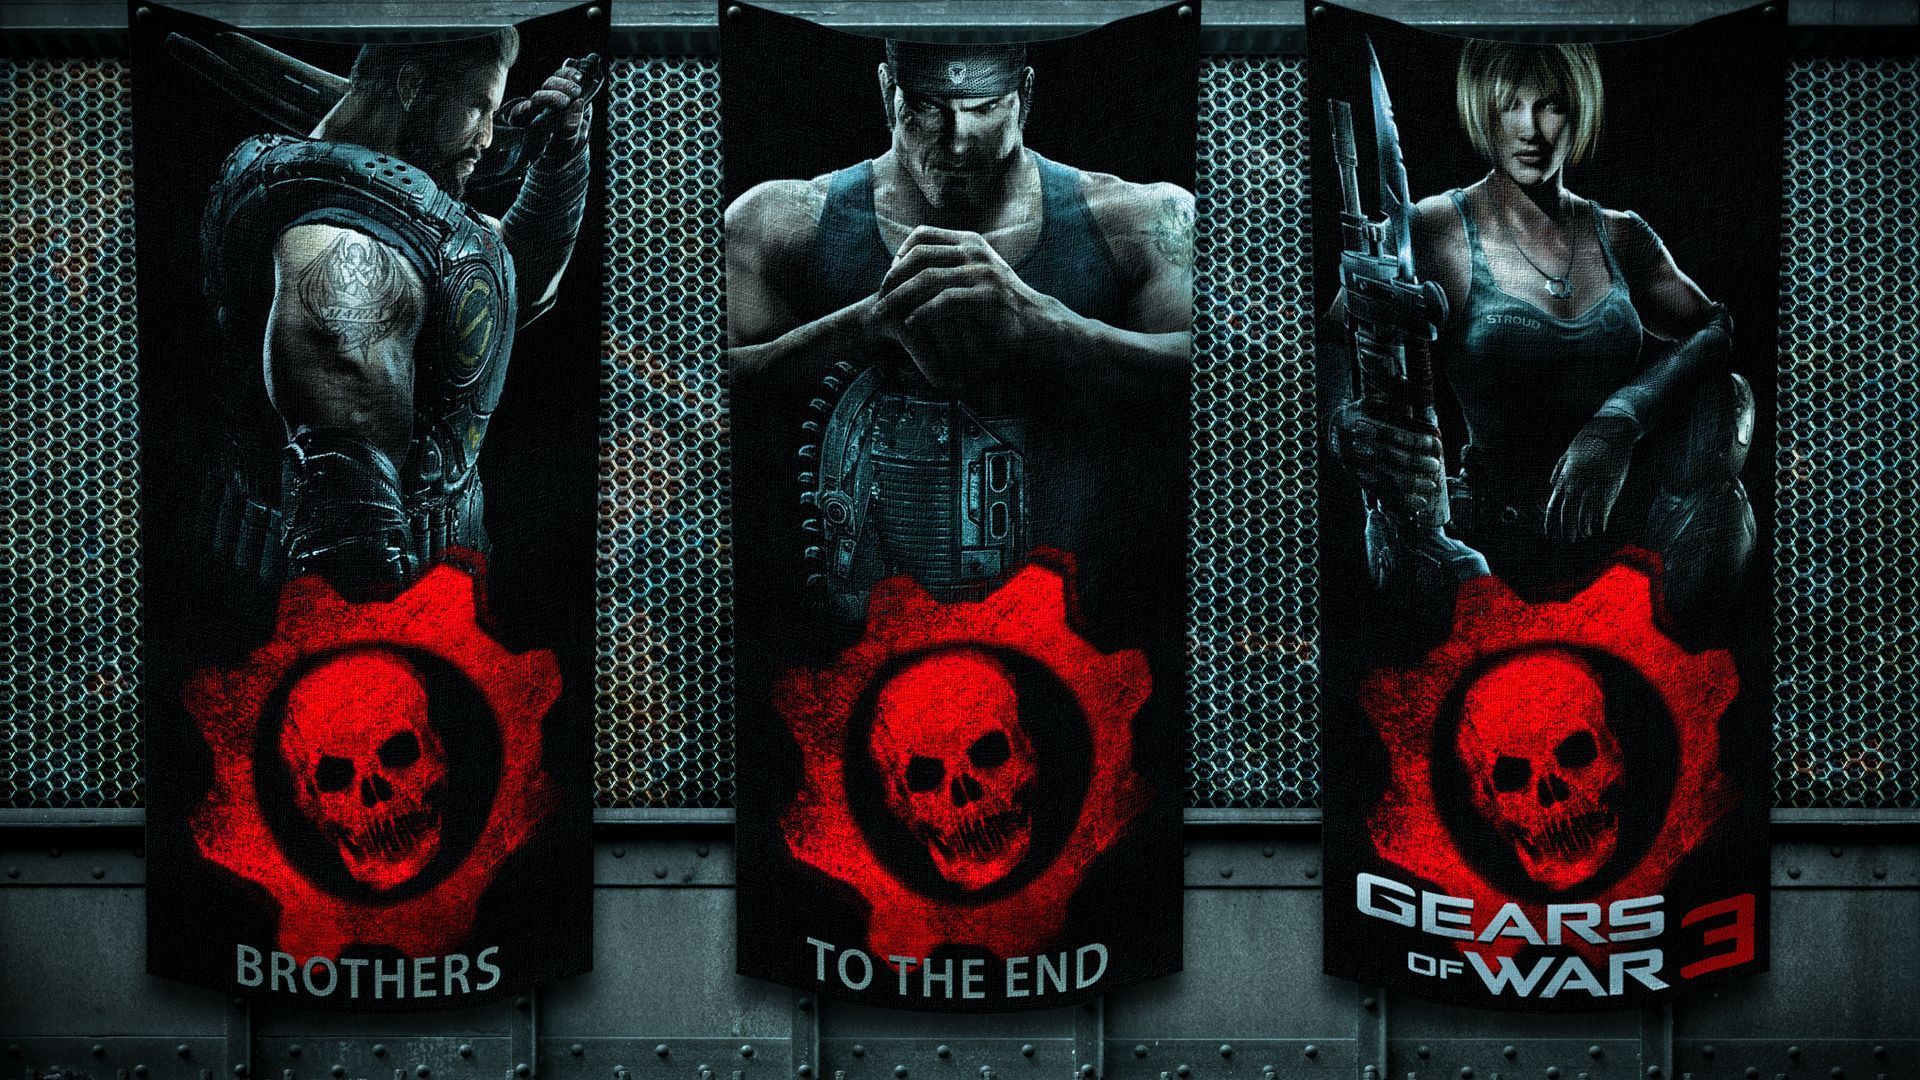 Crotale's Big Gears of War 3 Wallpaper Thread | Epic Games Community